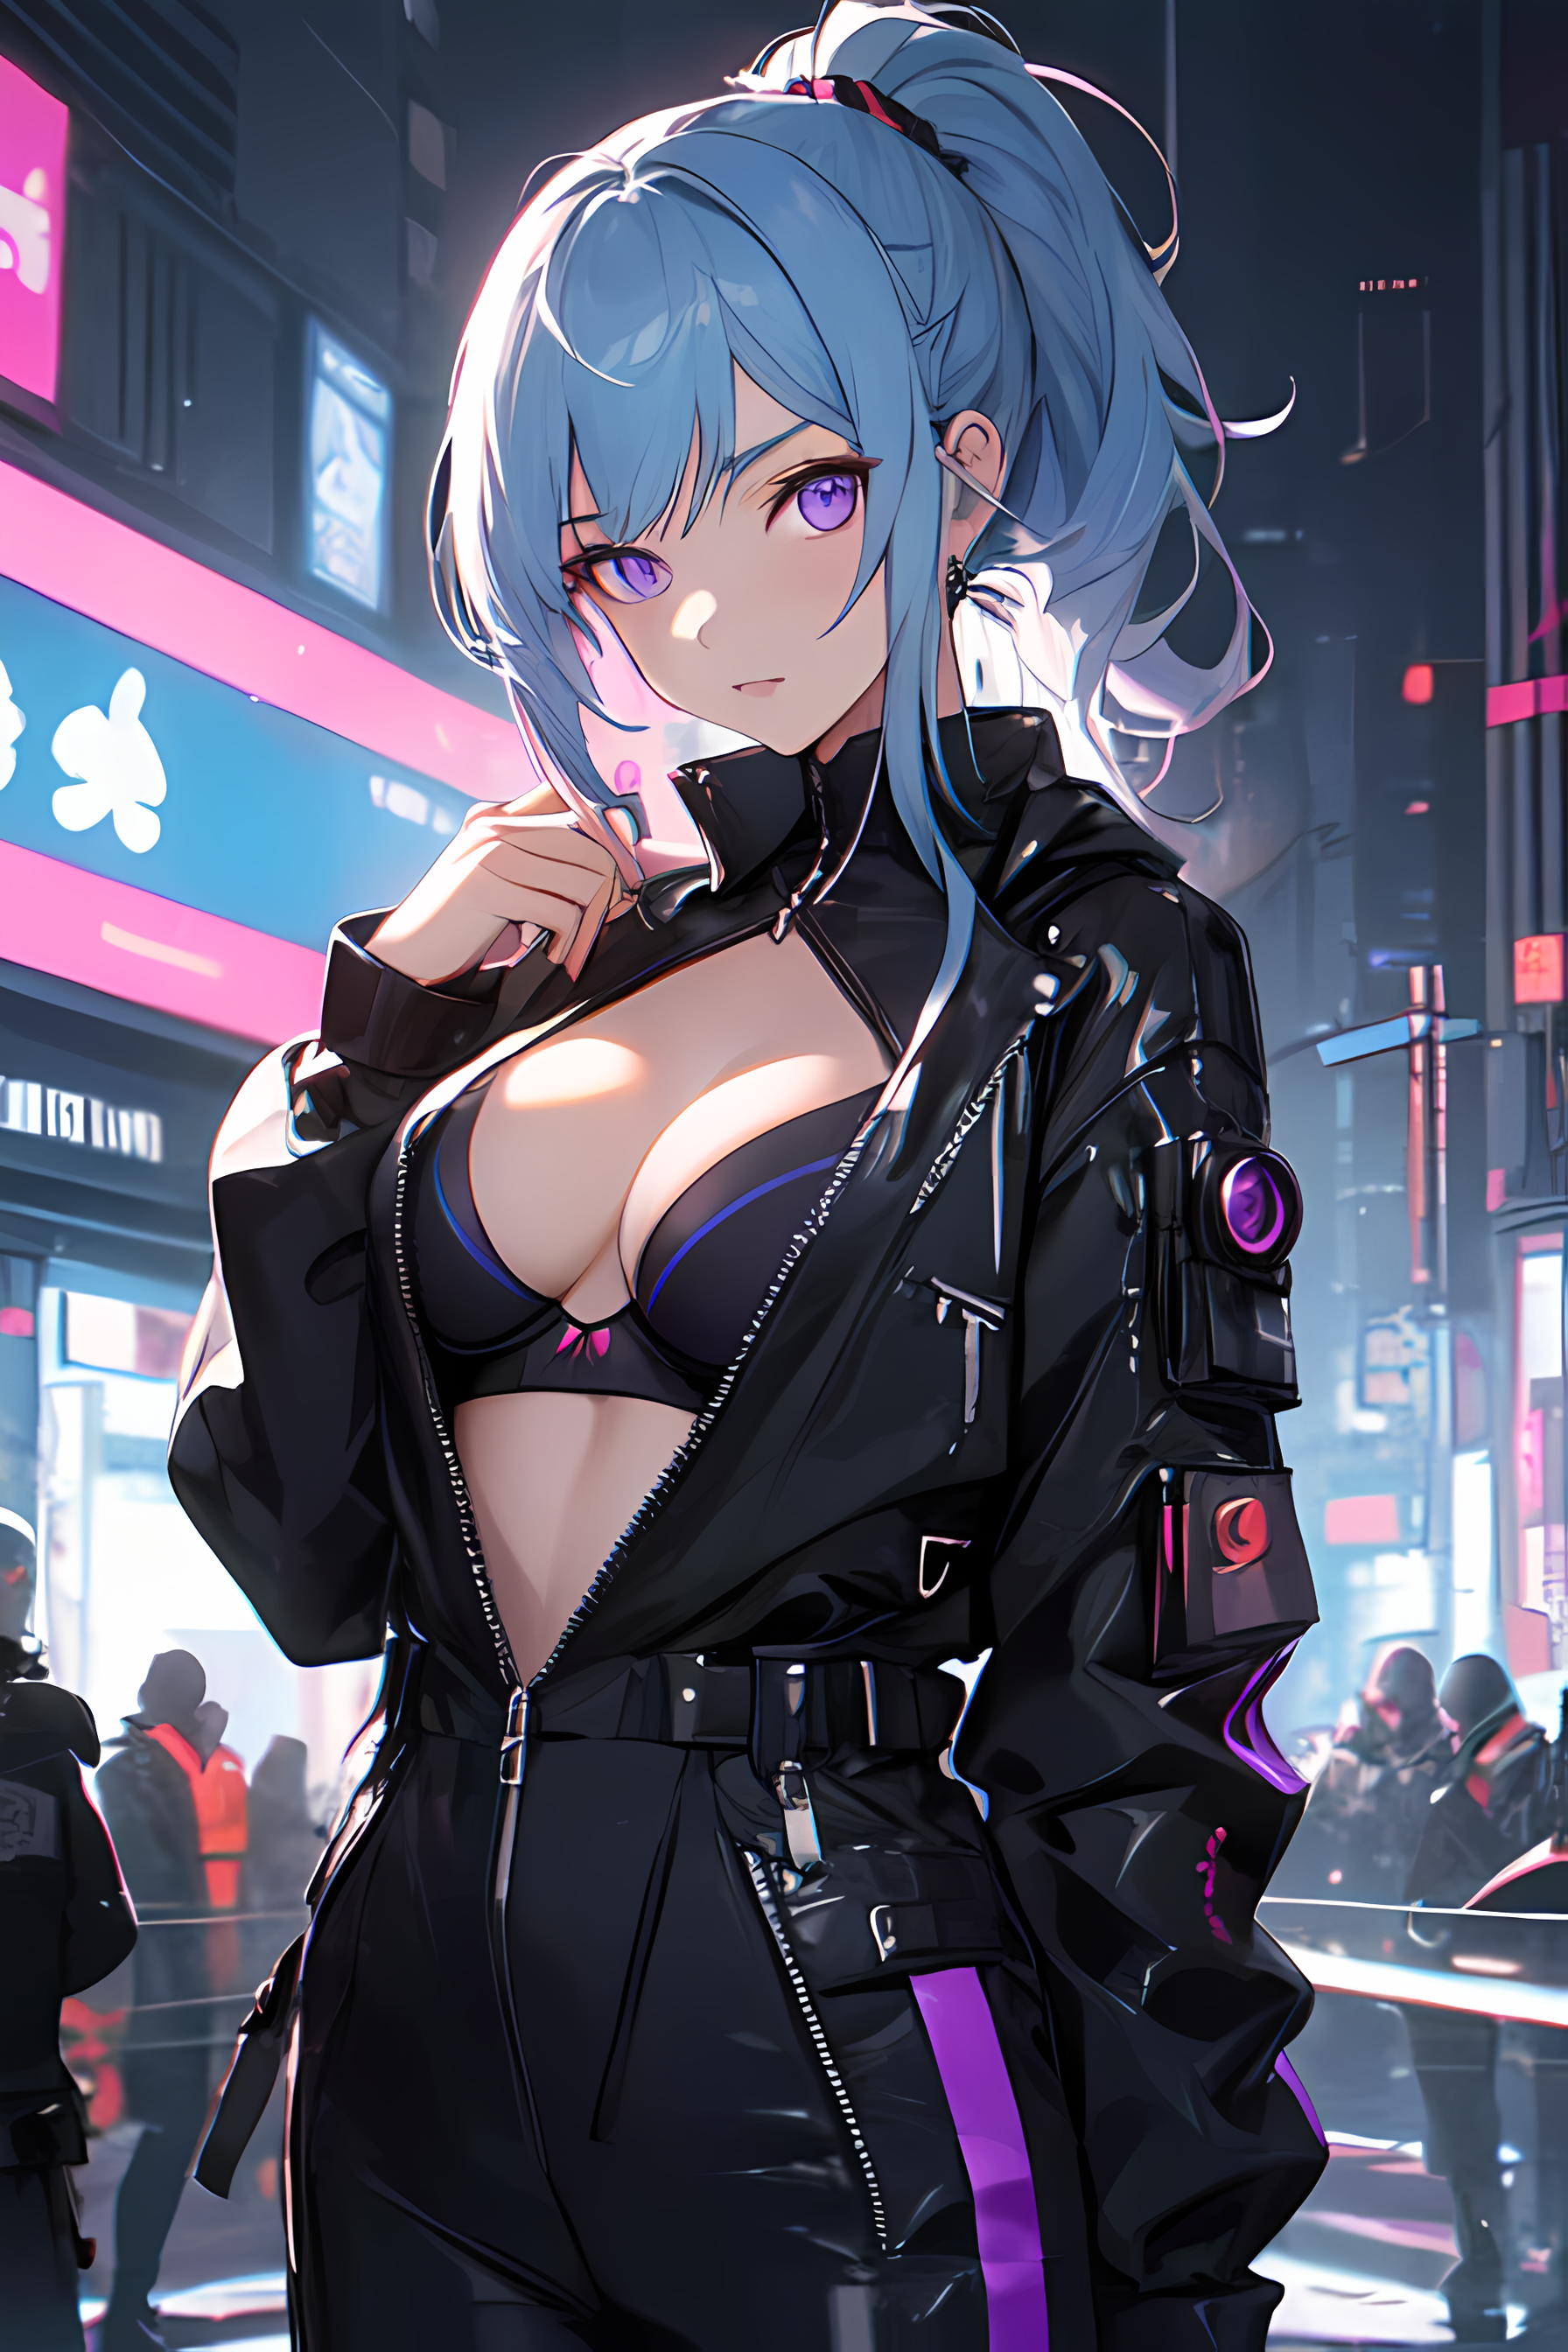 Cyberpunk anime girl (AI art) by ilmeks on DeviantArt